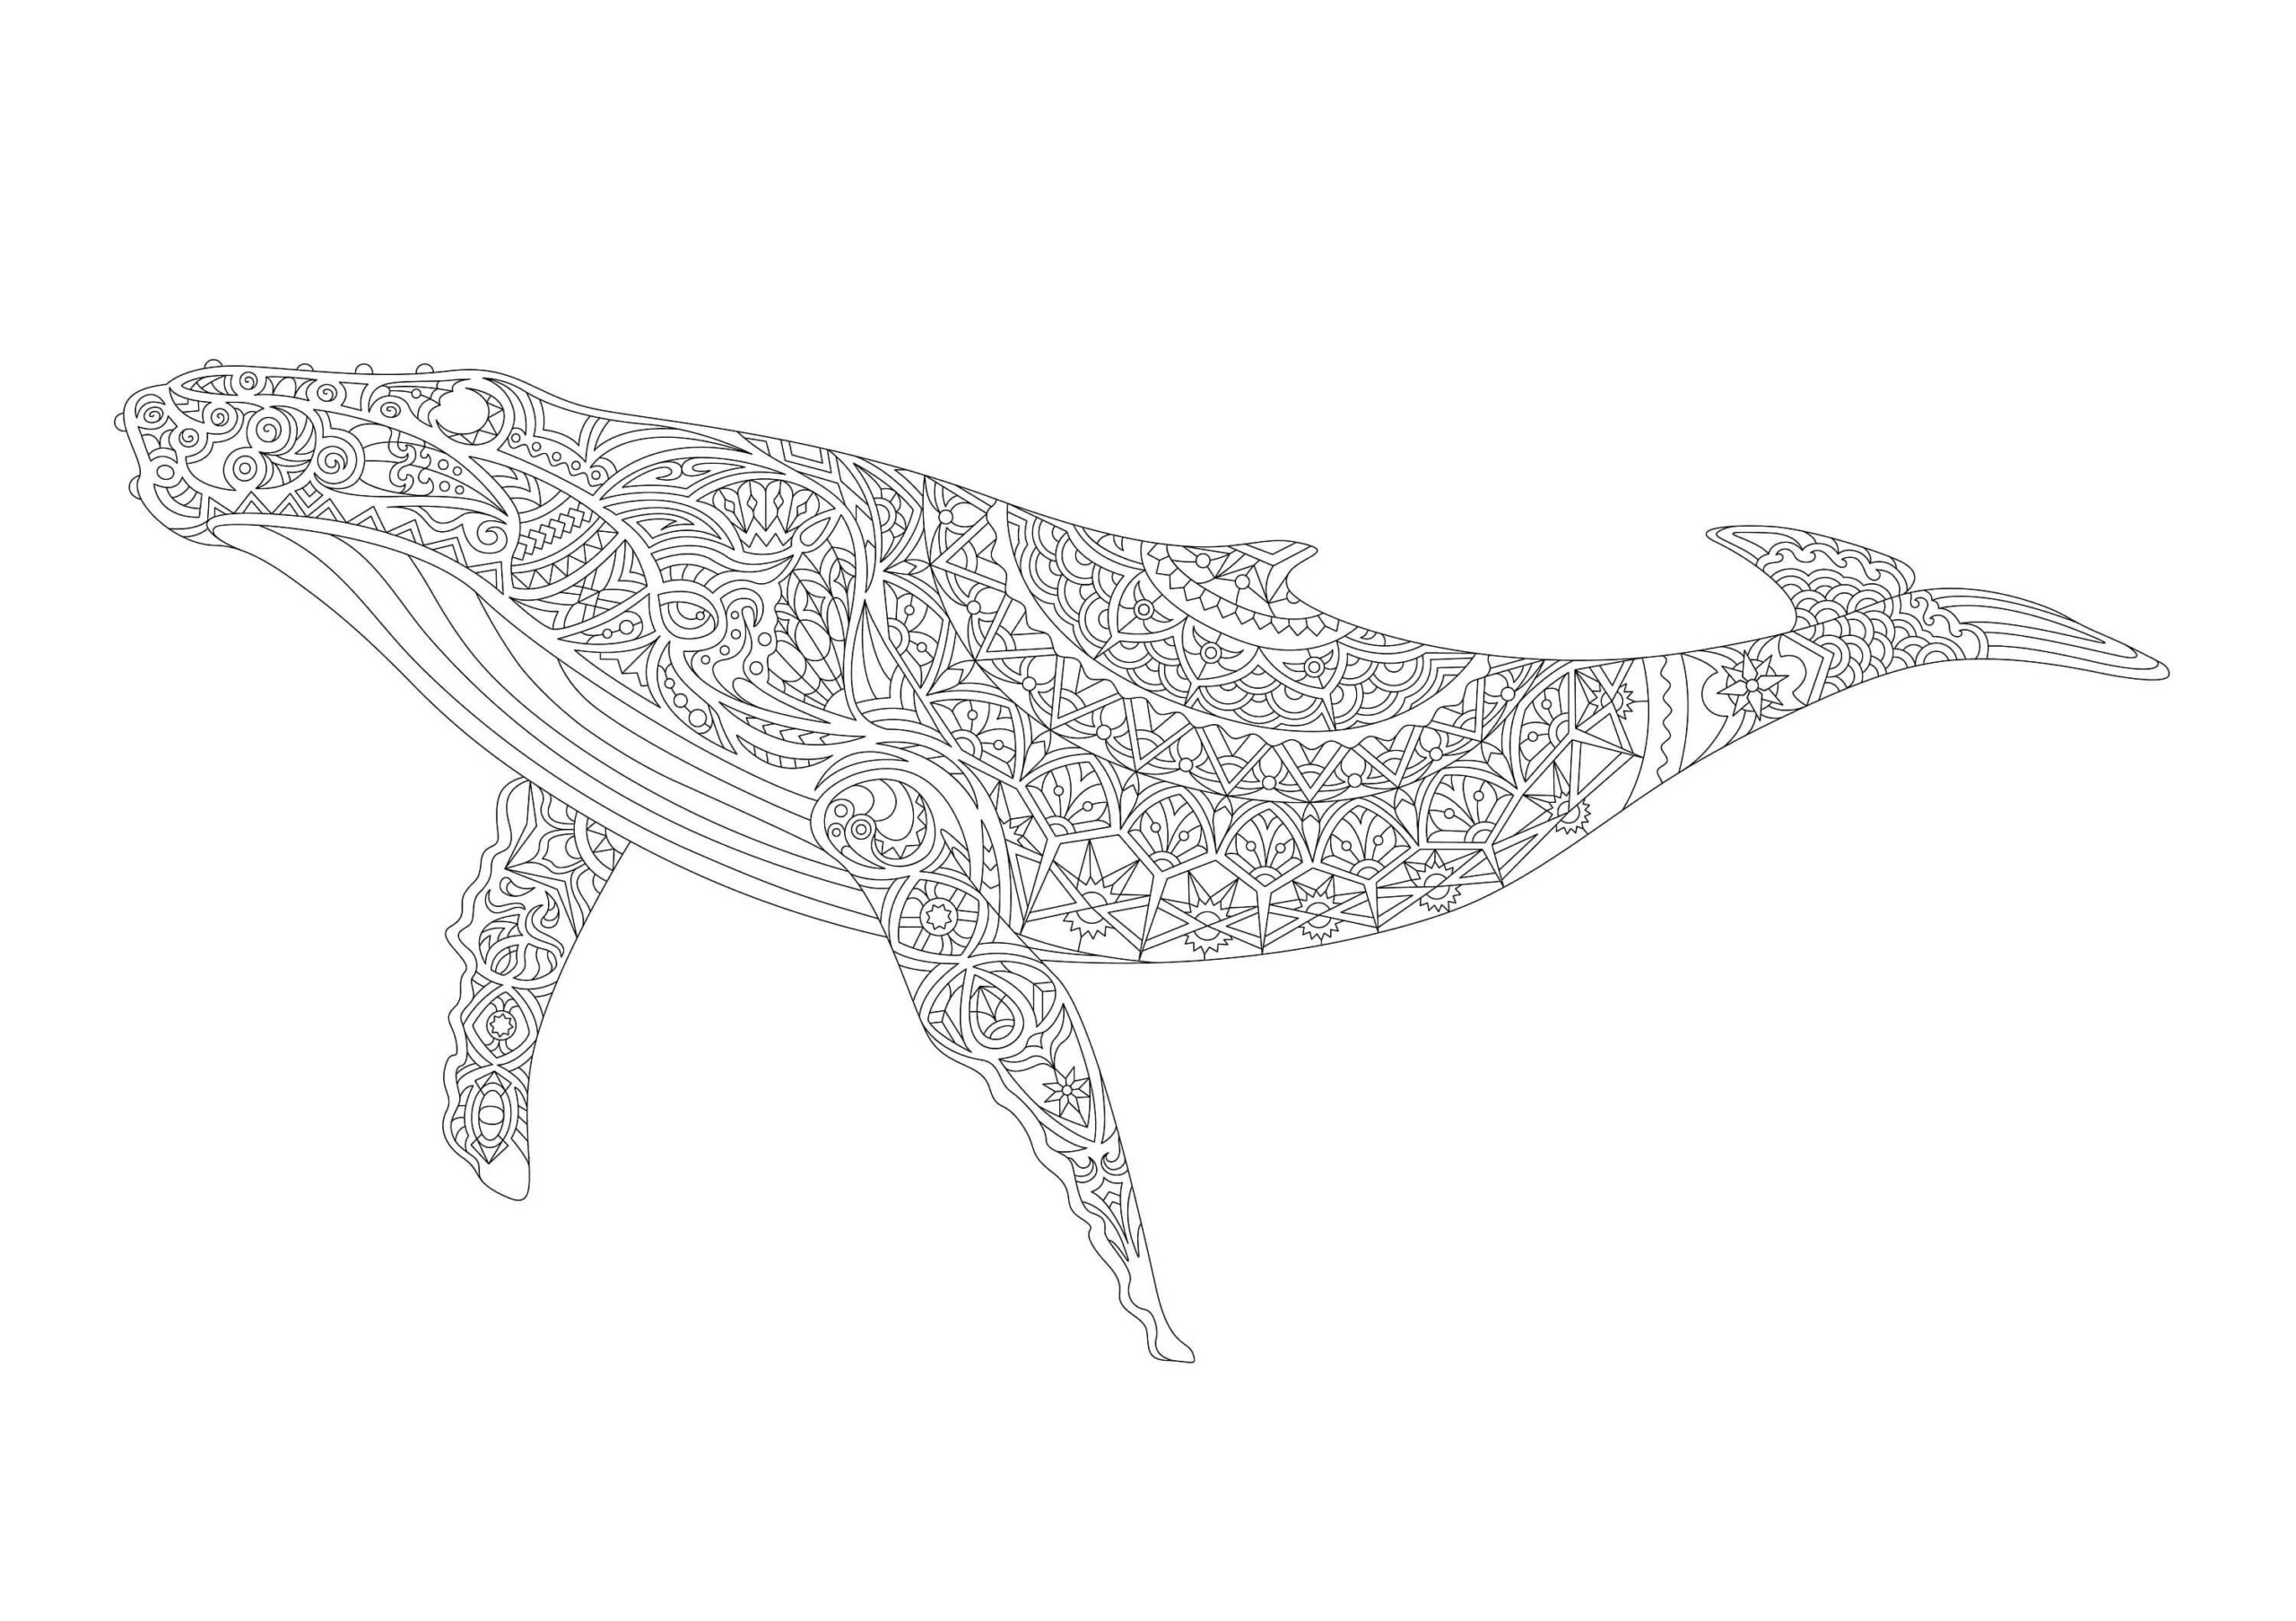 Mandala Whale Coloring Page - Sheet 3 Mandalas